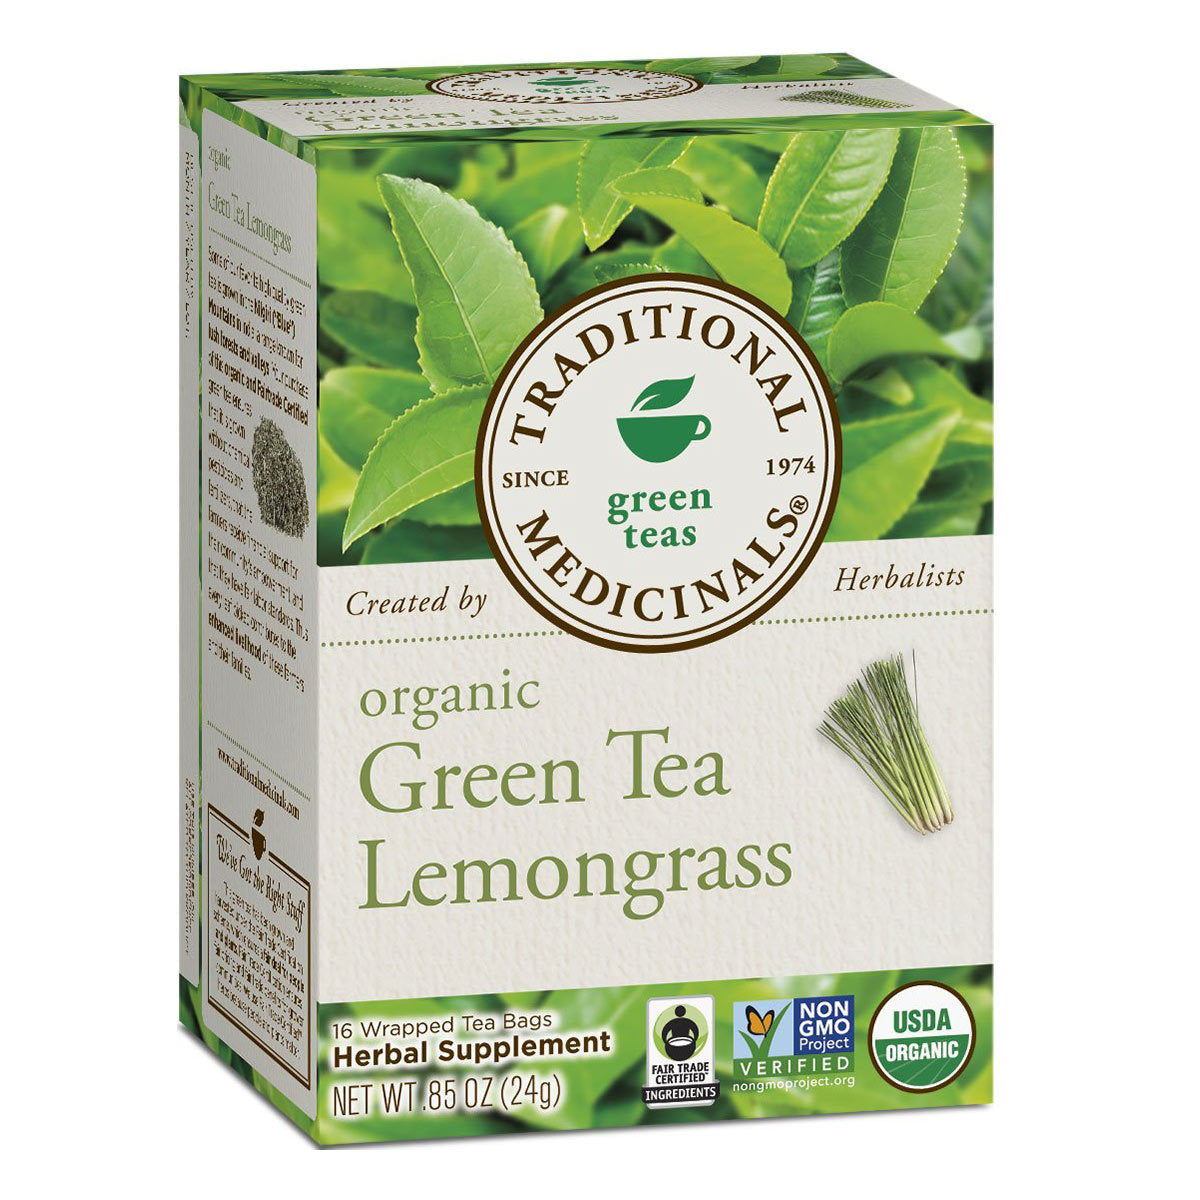 Primary image of Green Tea Lemongrass